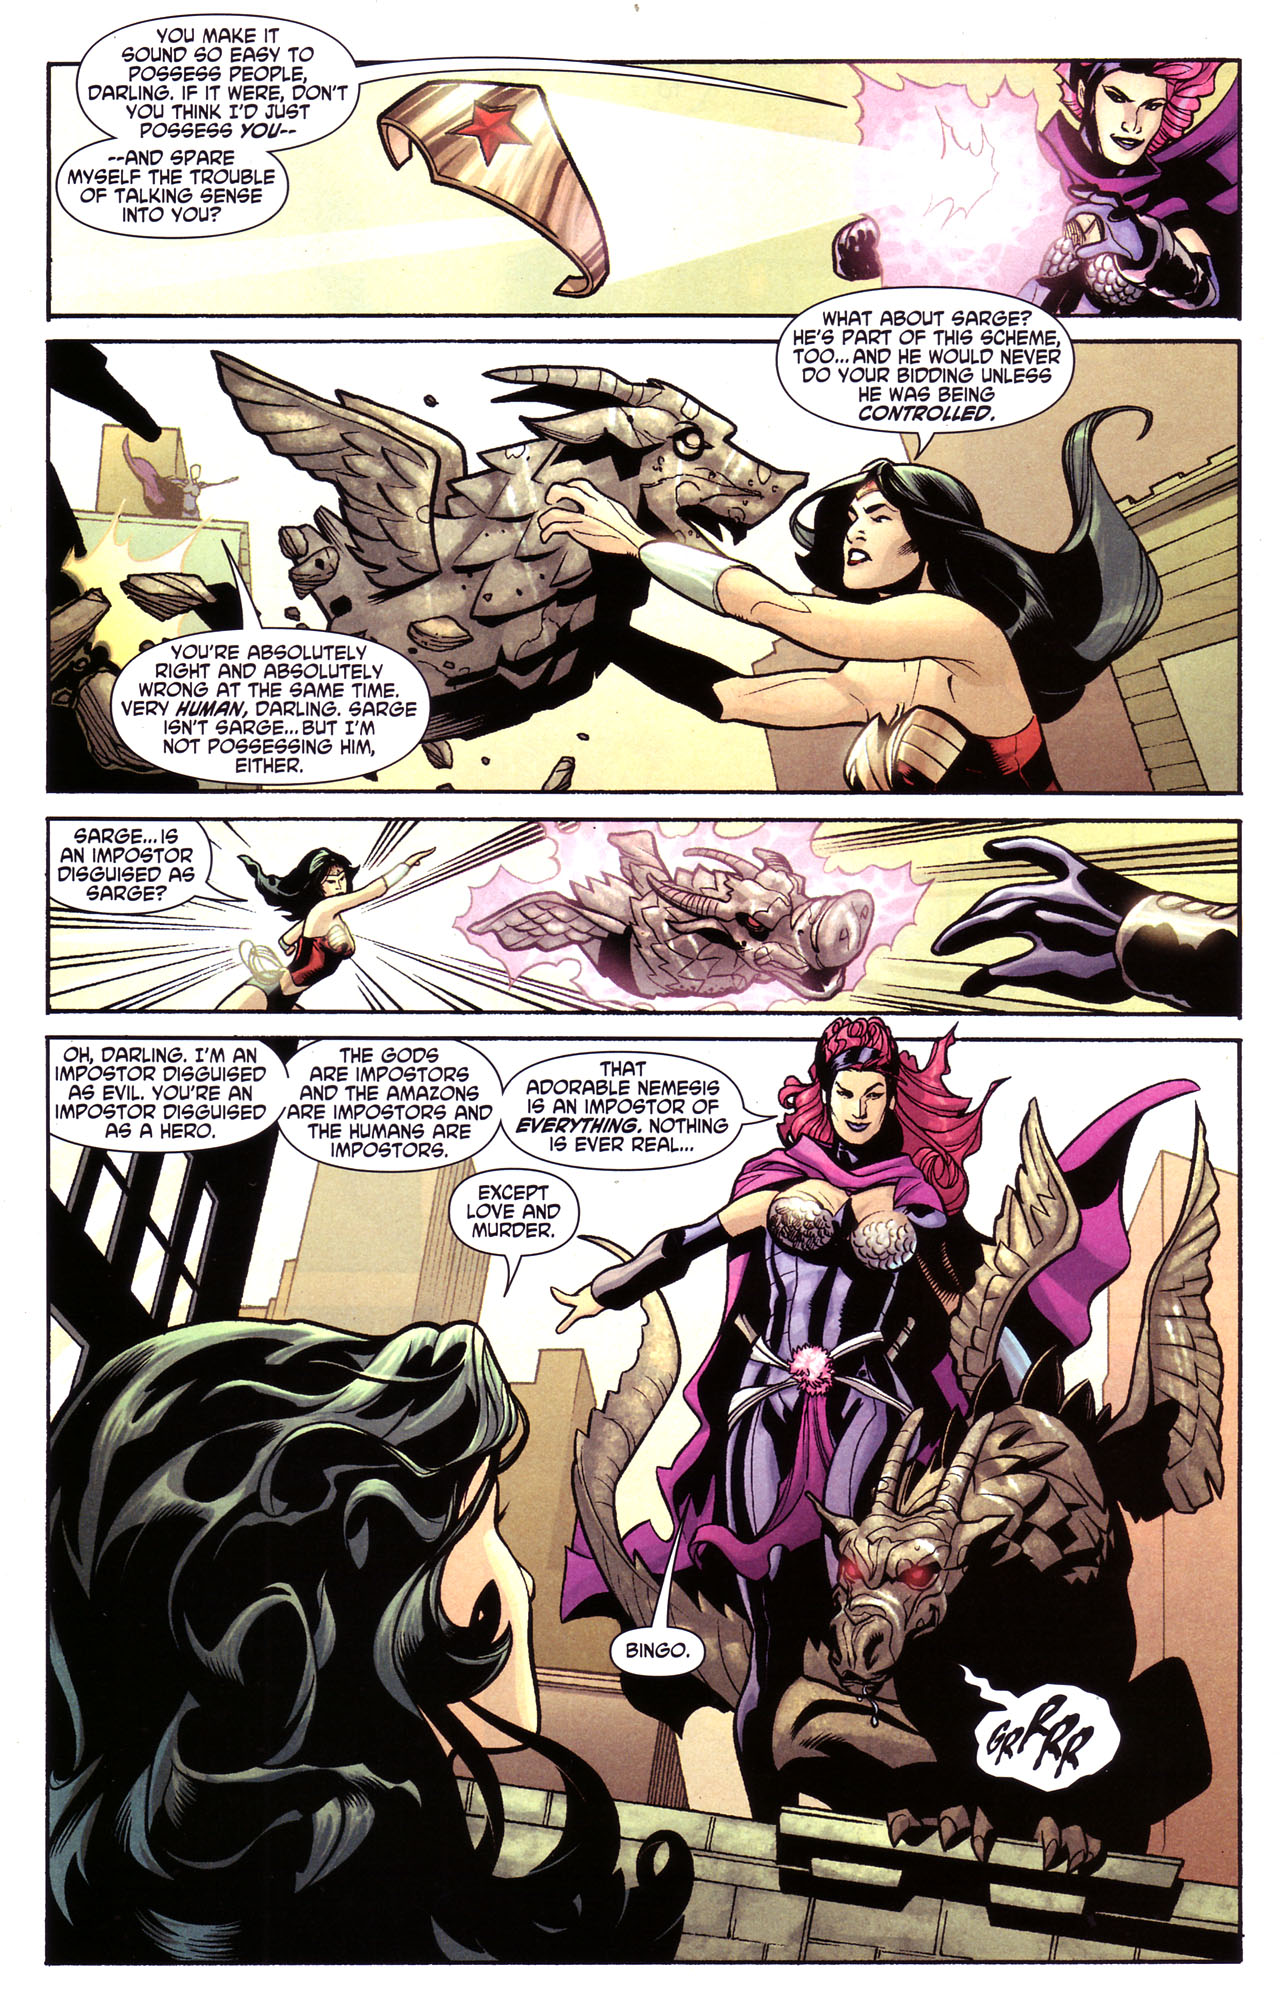 Wonder Woman (2006) 9 Page 14